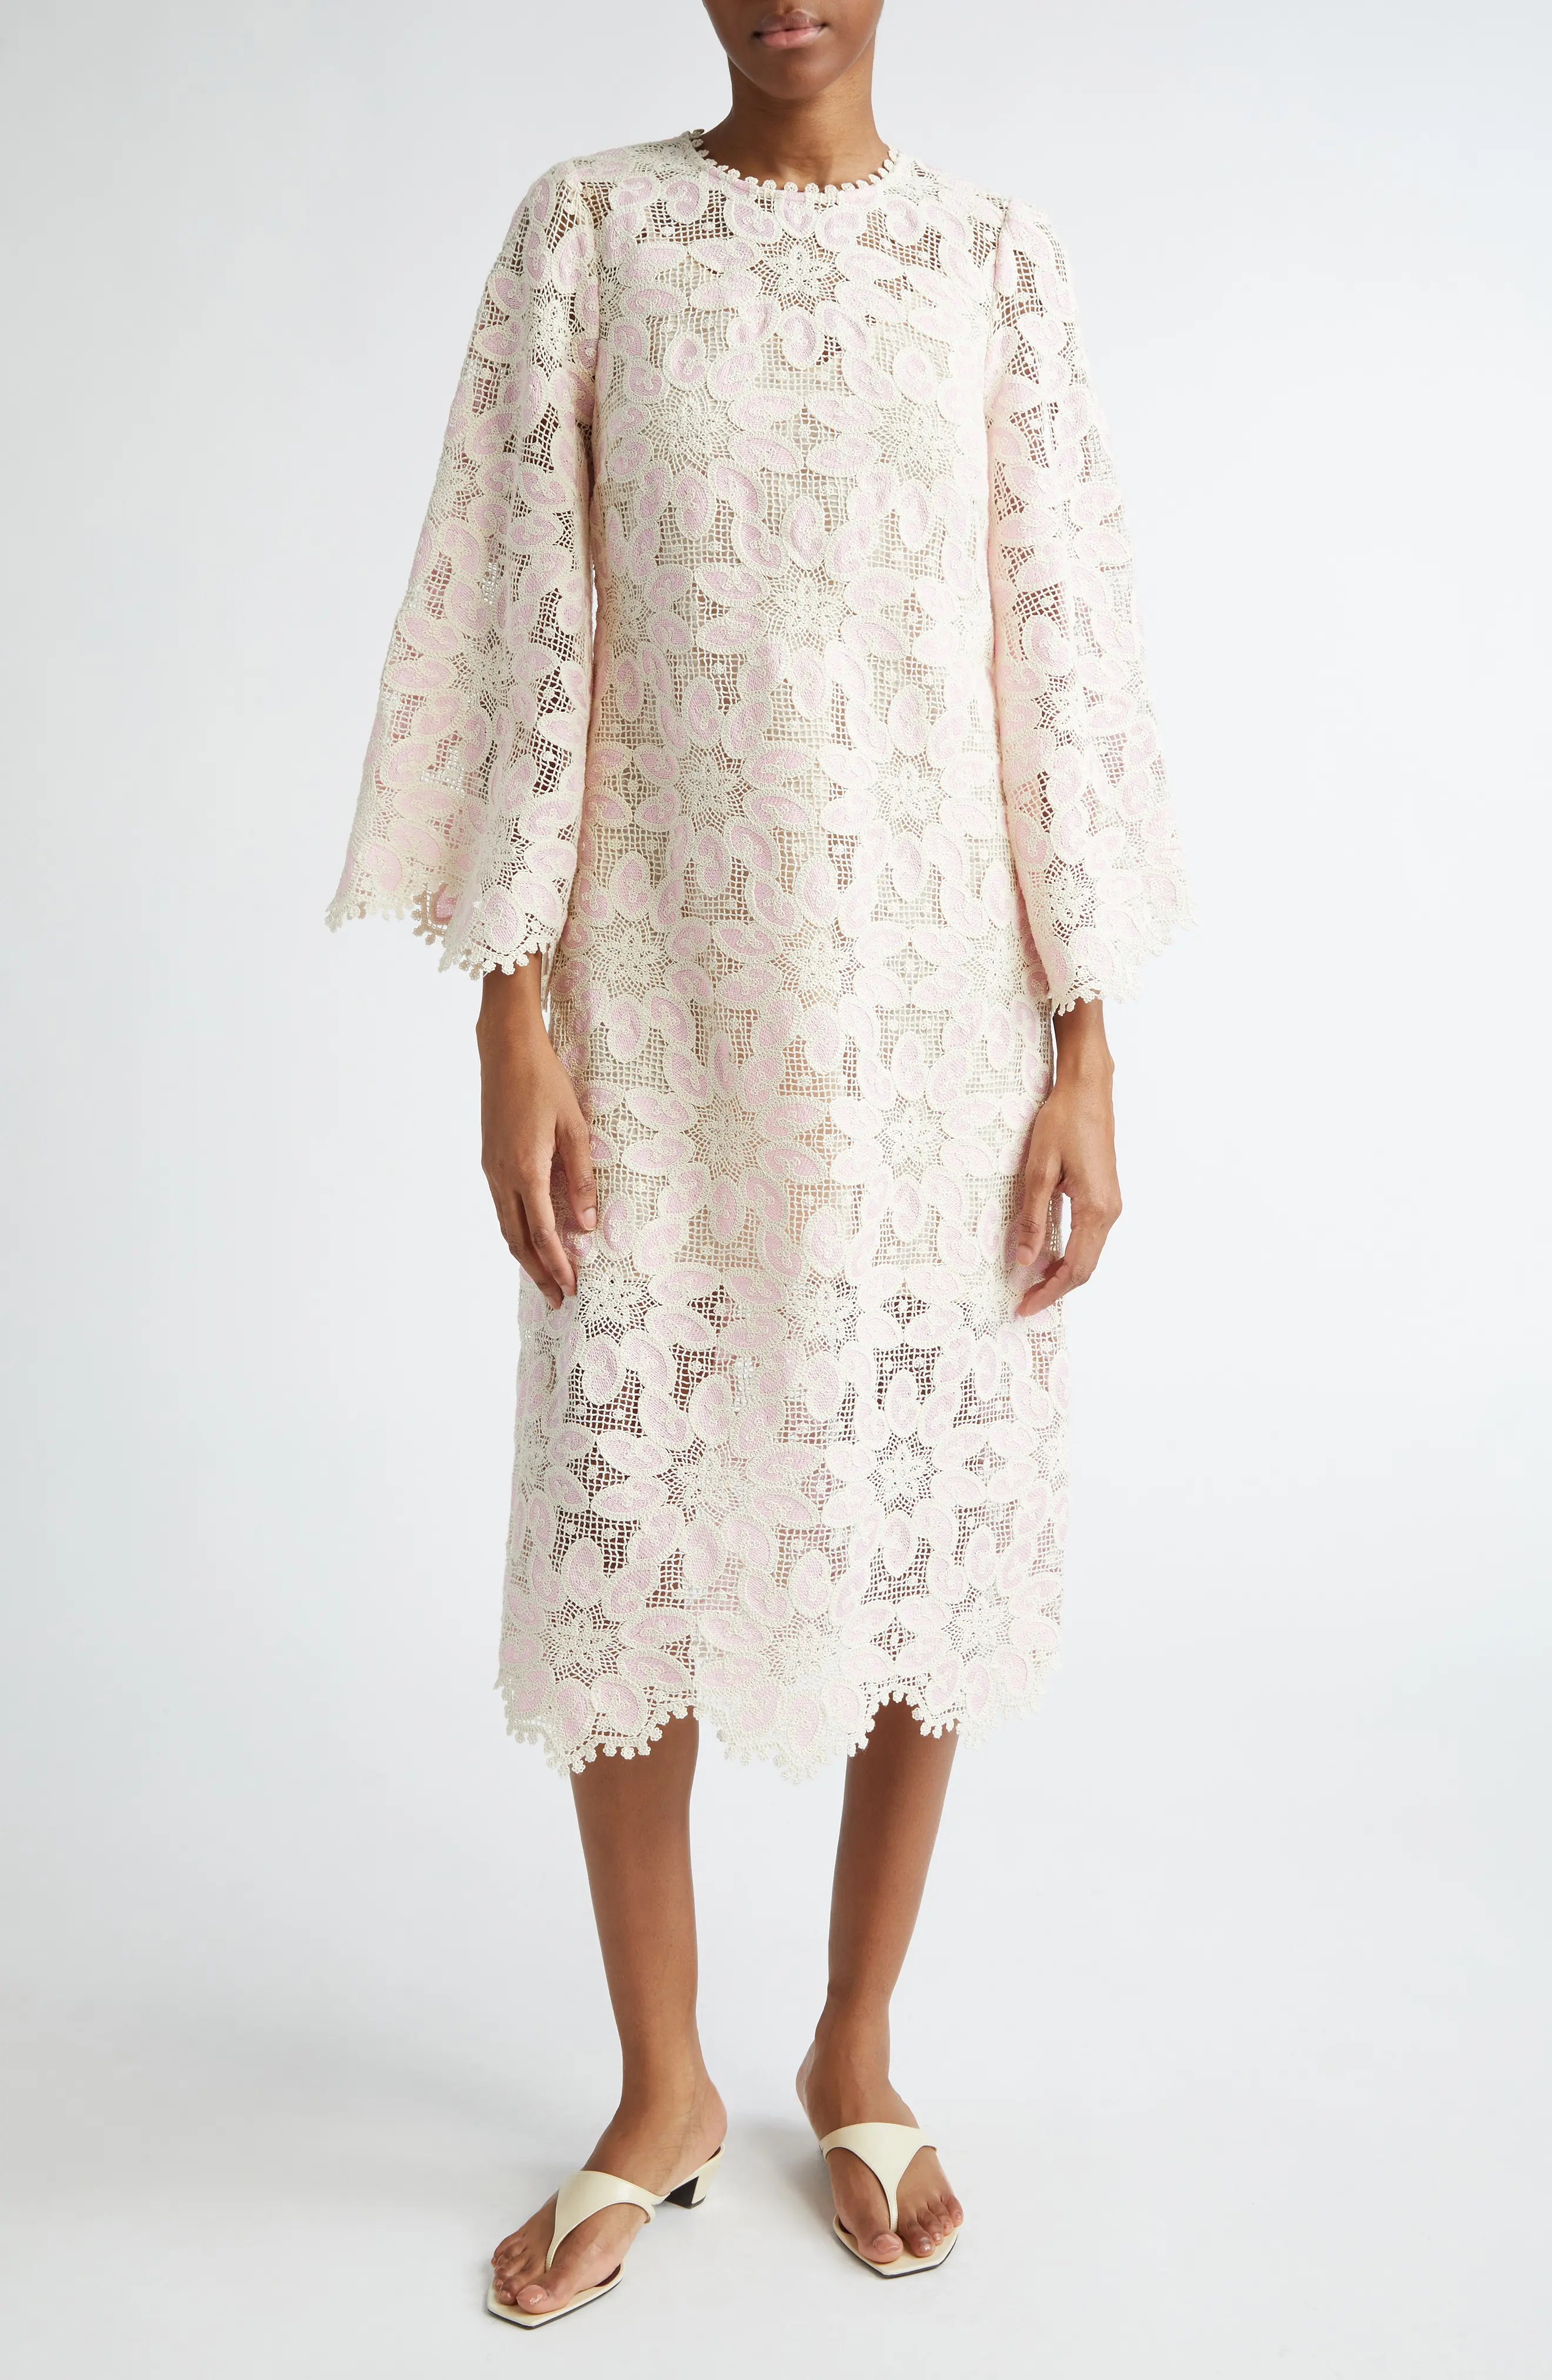 Ottie Long Sleeve Guipure Lace Cotton Blend Midi Dress in Cream/Pink - 1